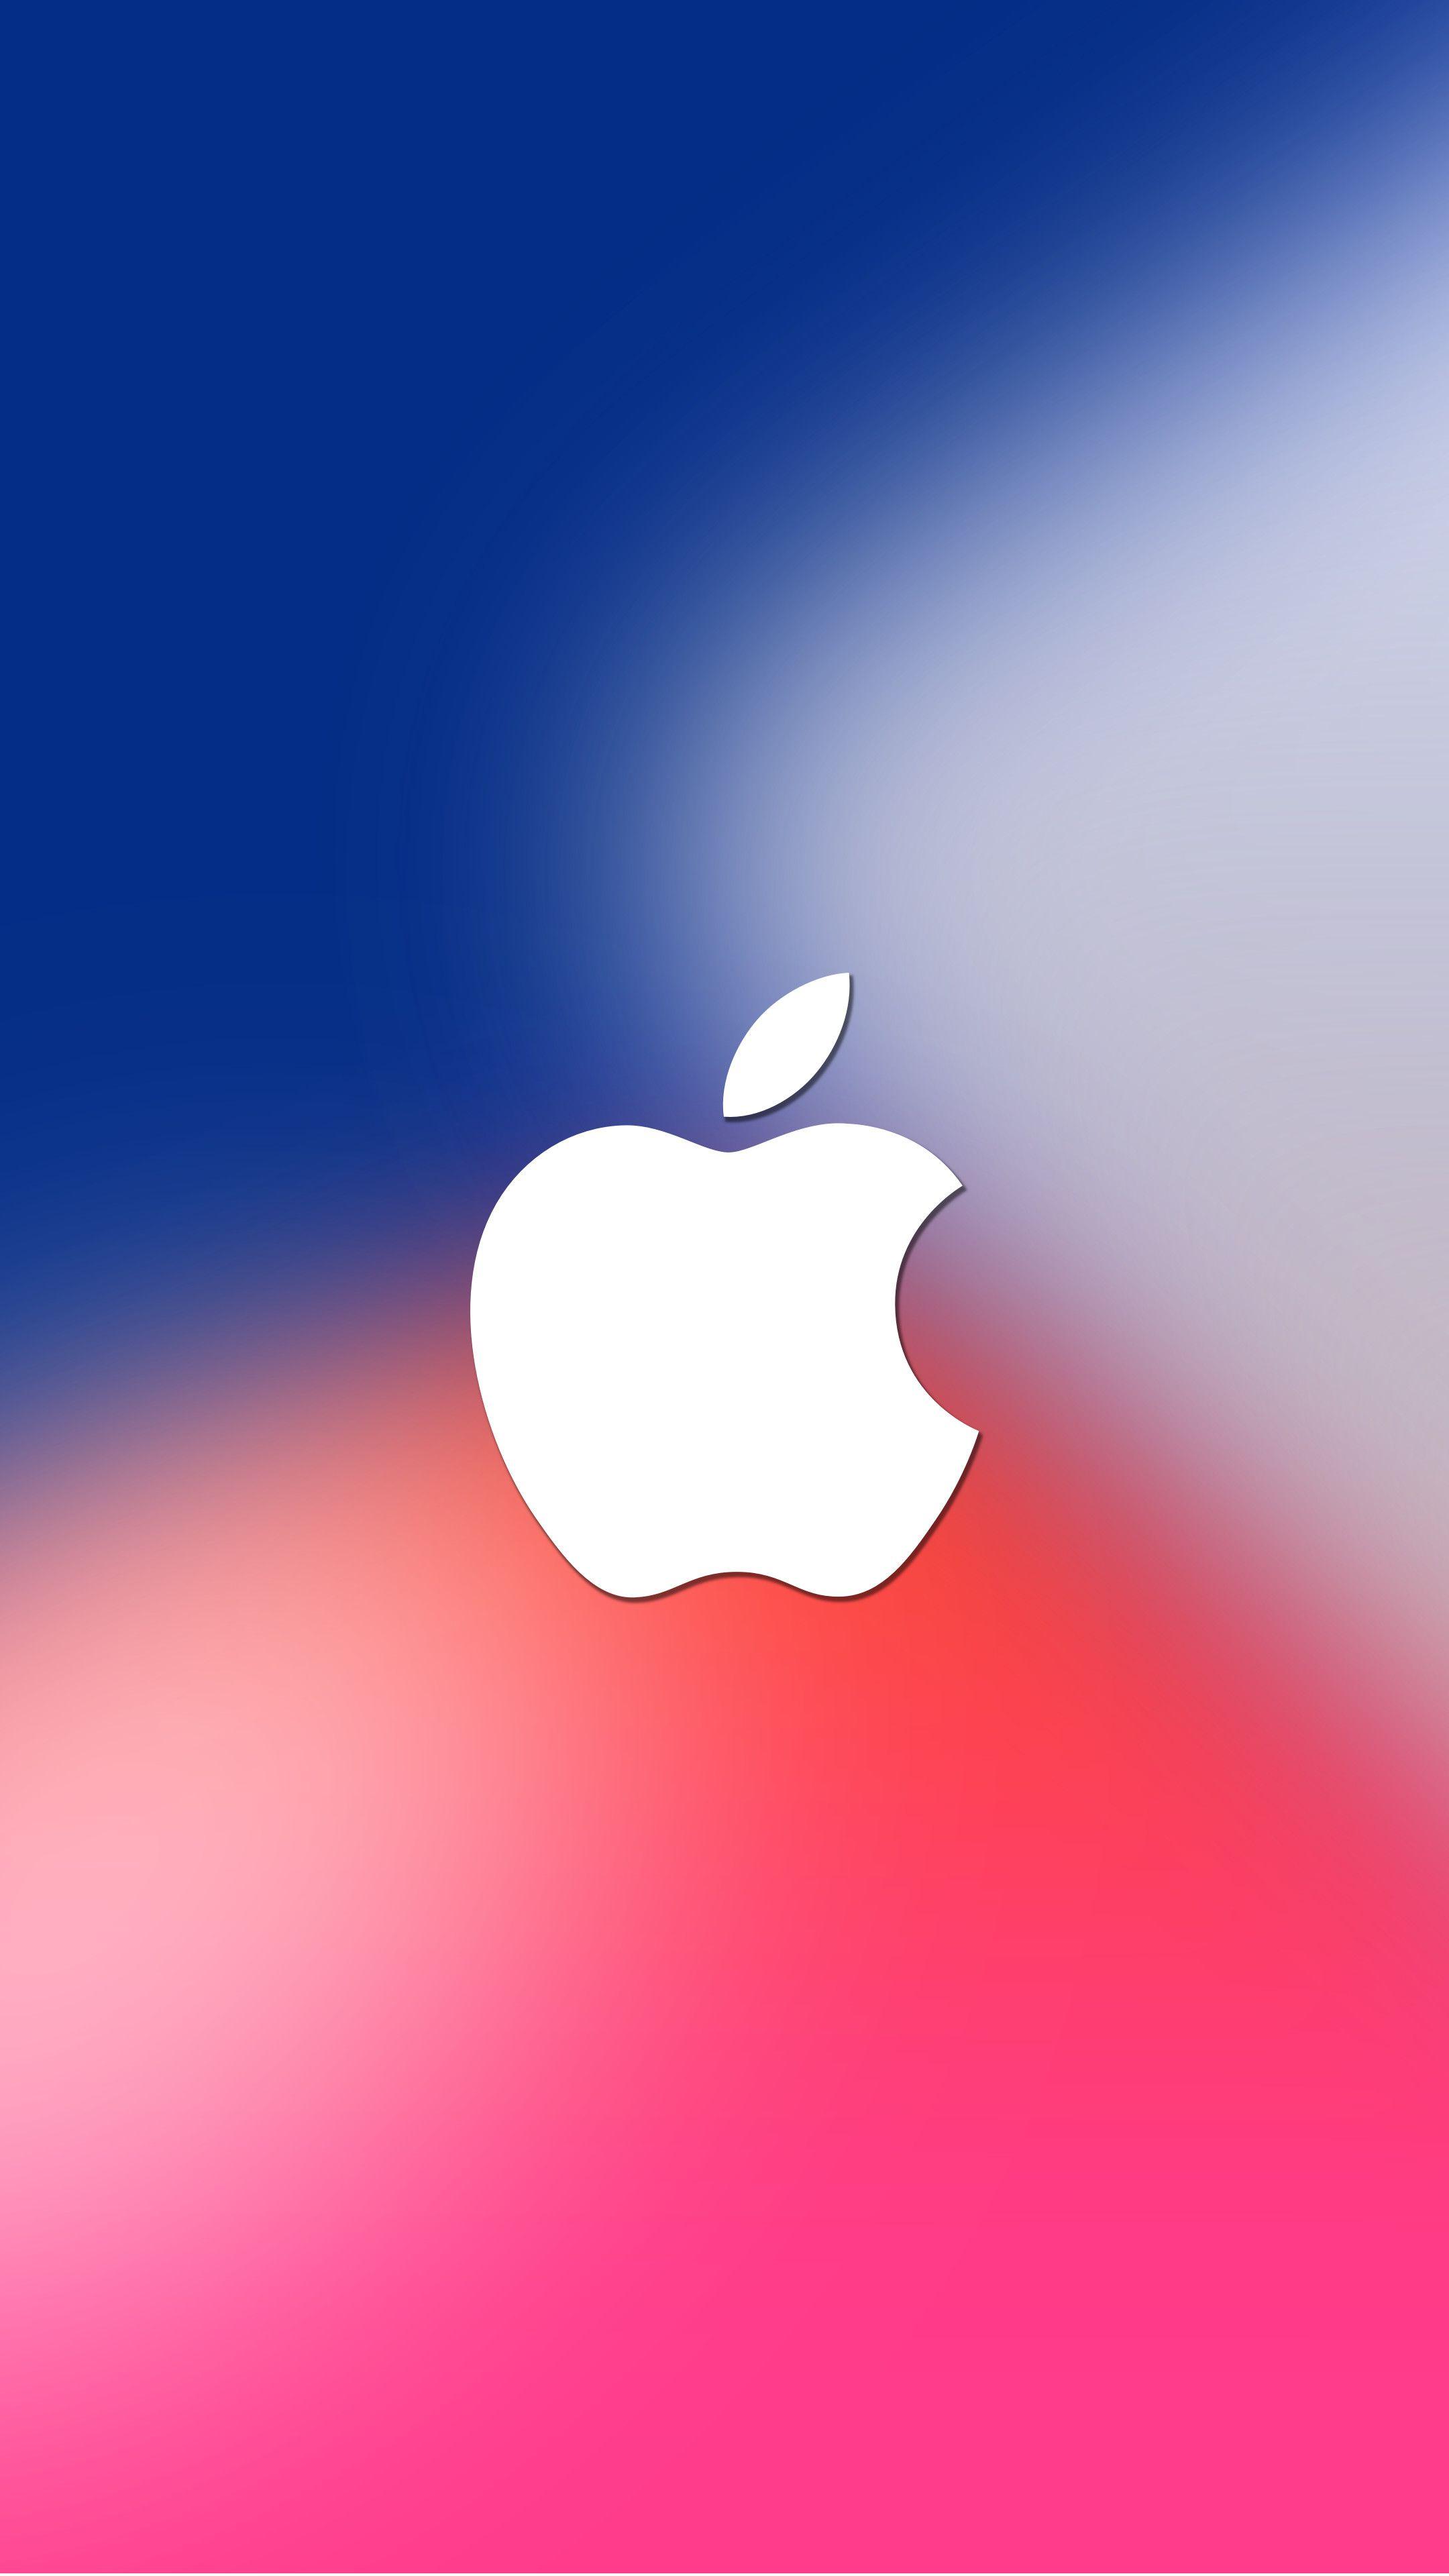 White Apple Logo Wallpapers - Top Free White Apple Logo Backgrounds ...